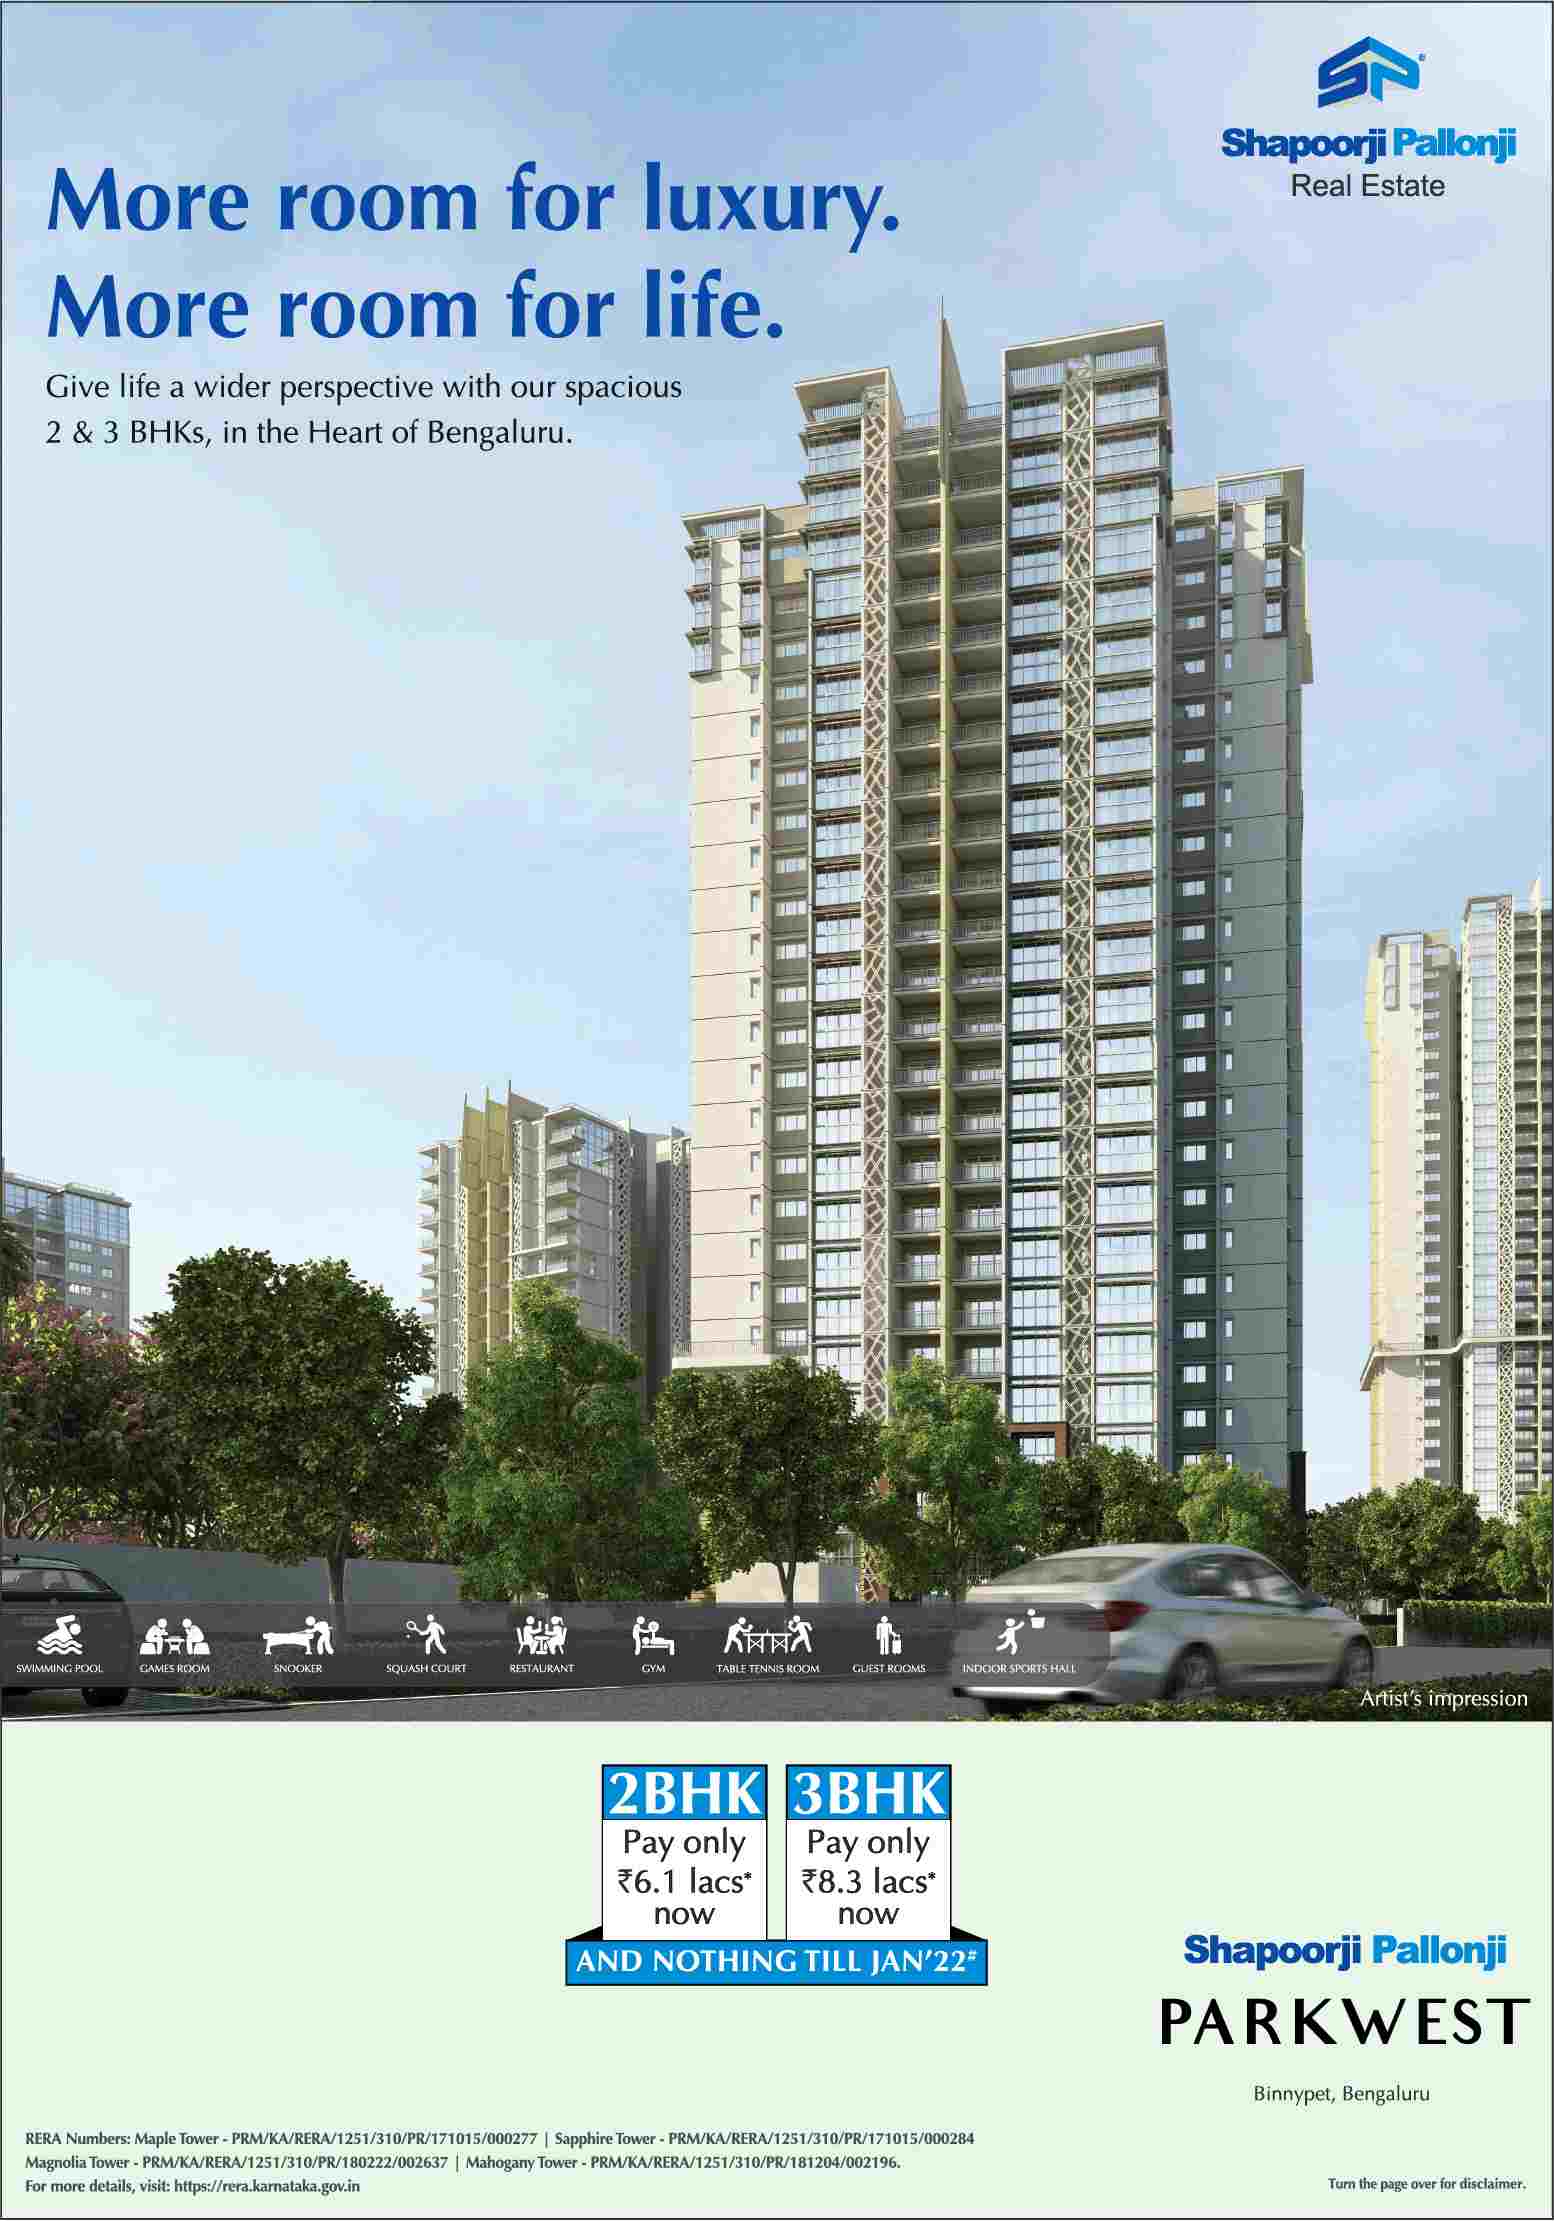 Book 2 & 3 bhk apartment at Shapoorji Pallonji Parkwest in Bangalore Update